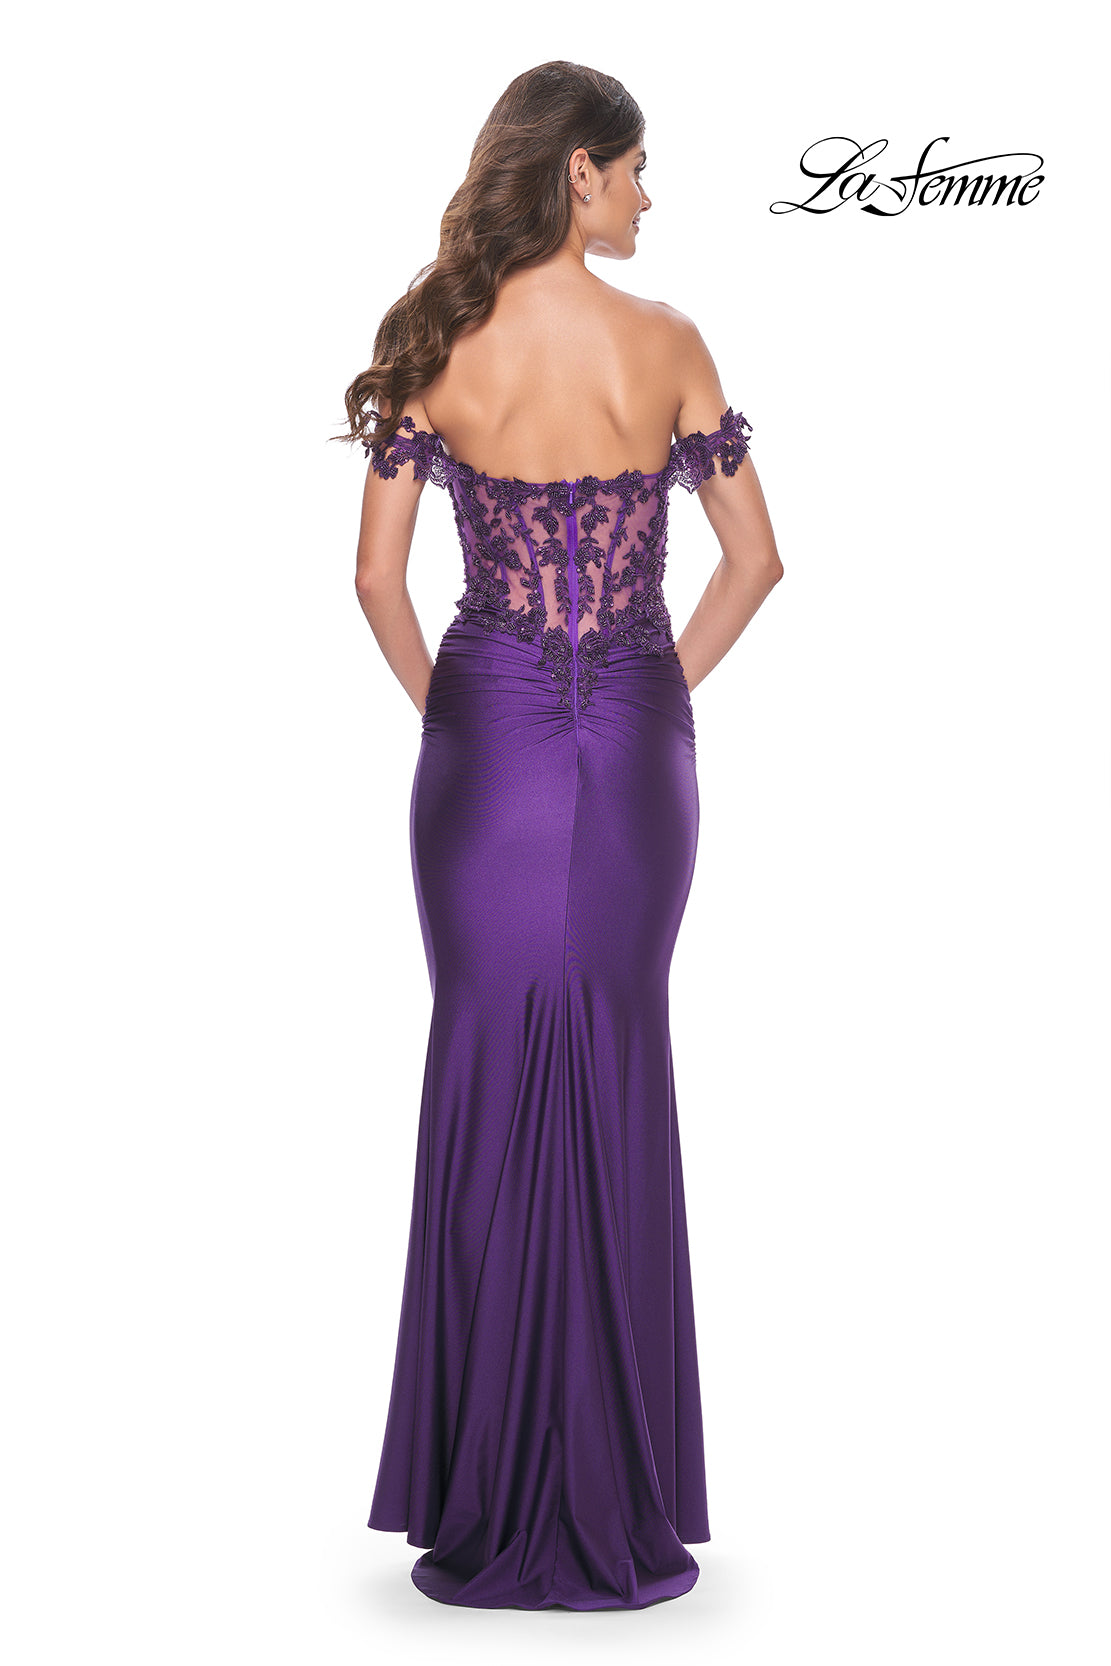 La-Femme-32302-Sweetheart-Neckline-Zipper-Back-Corset-Lace-Jersey-Fitted-Royal-Purple-Evening-Dress-B-Chic-Fashions-Prom-Dress